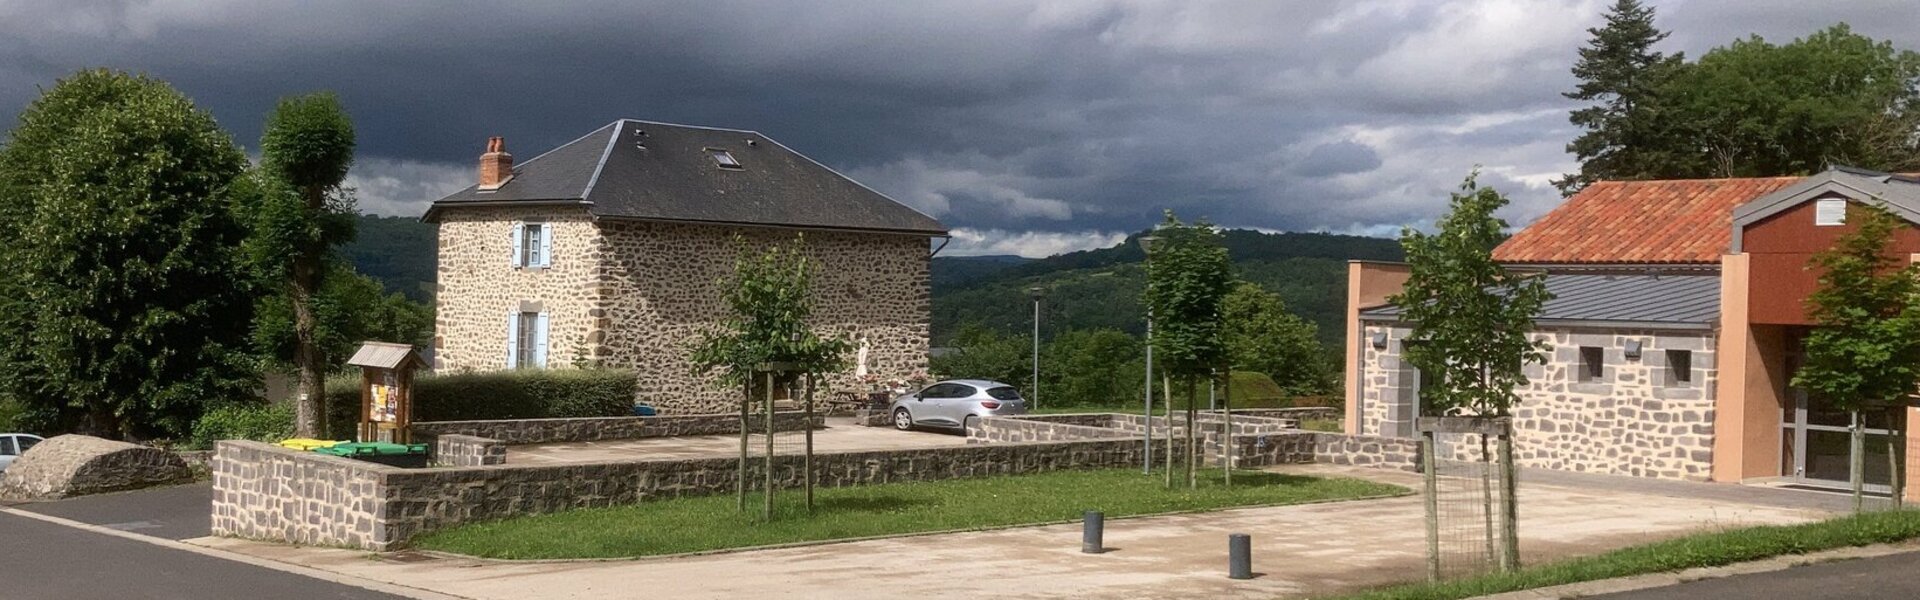 Mairie Commune Andelat Cantal Auvergne